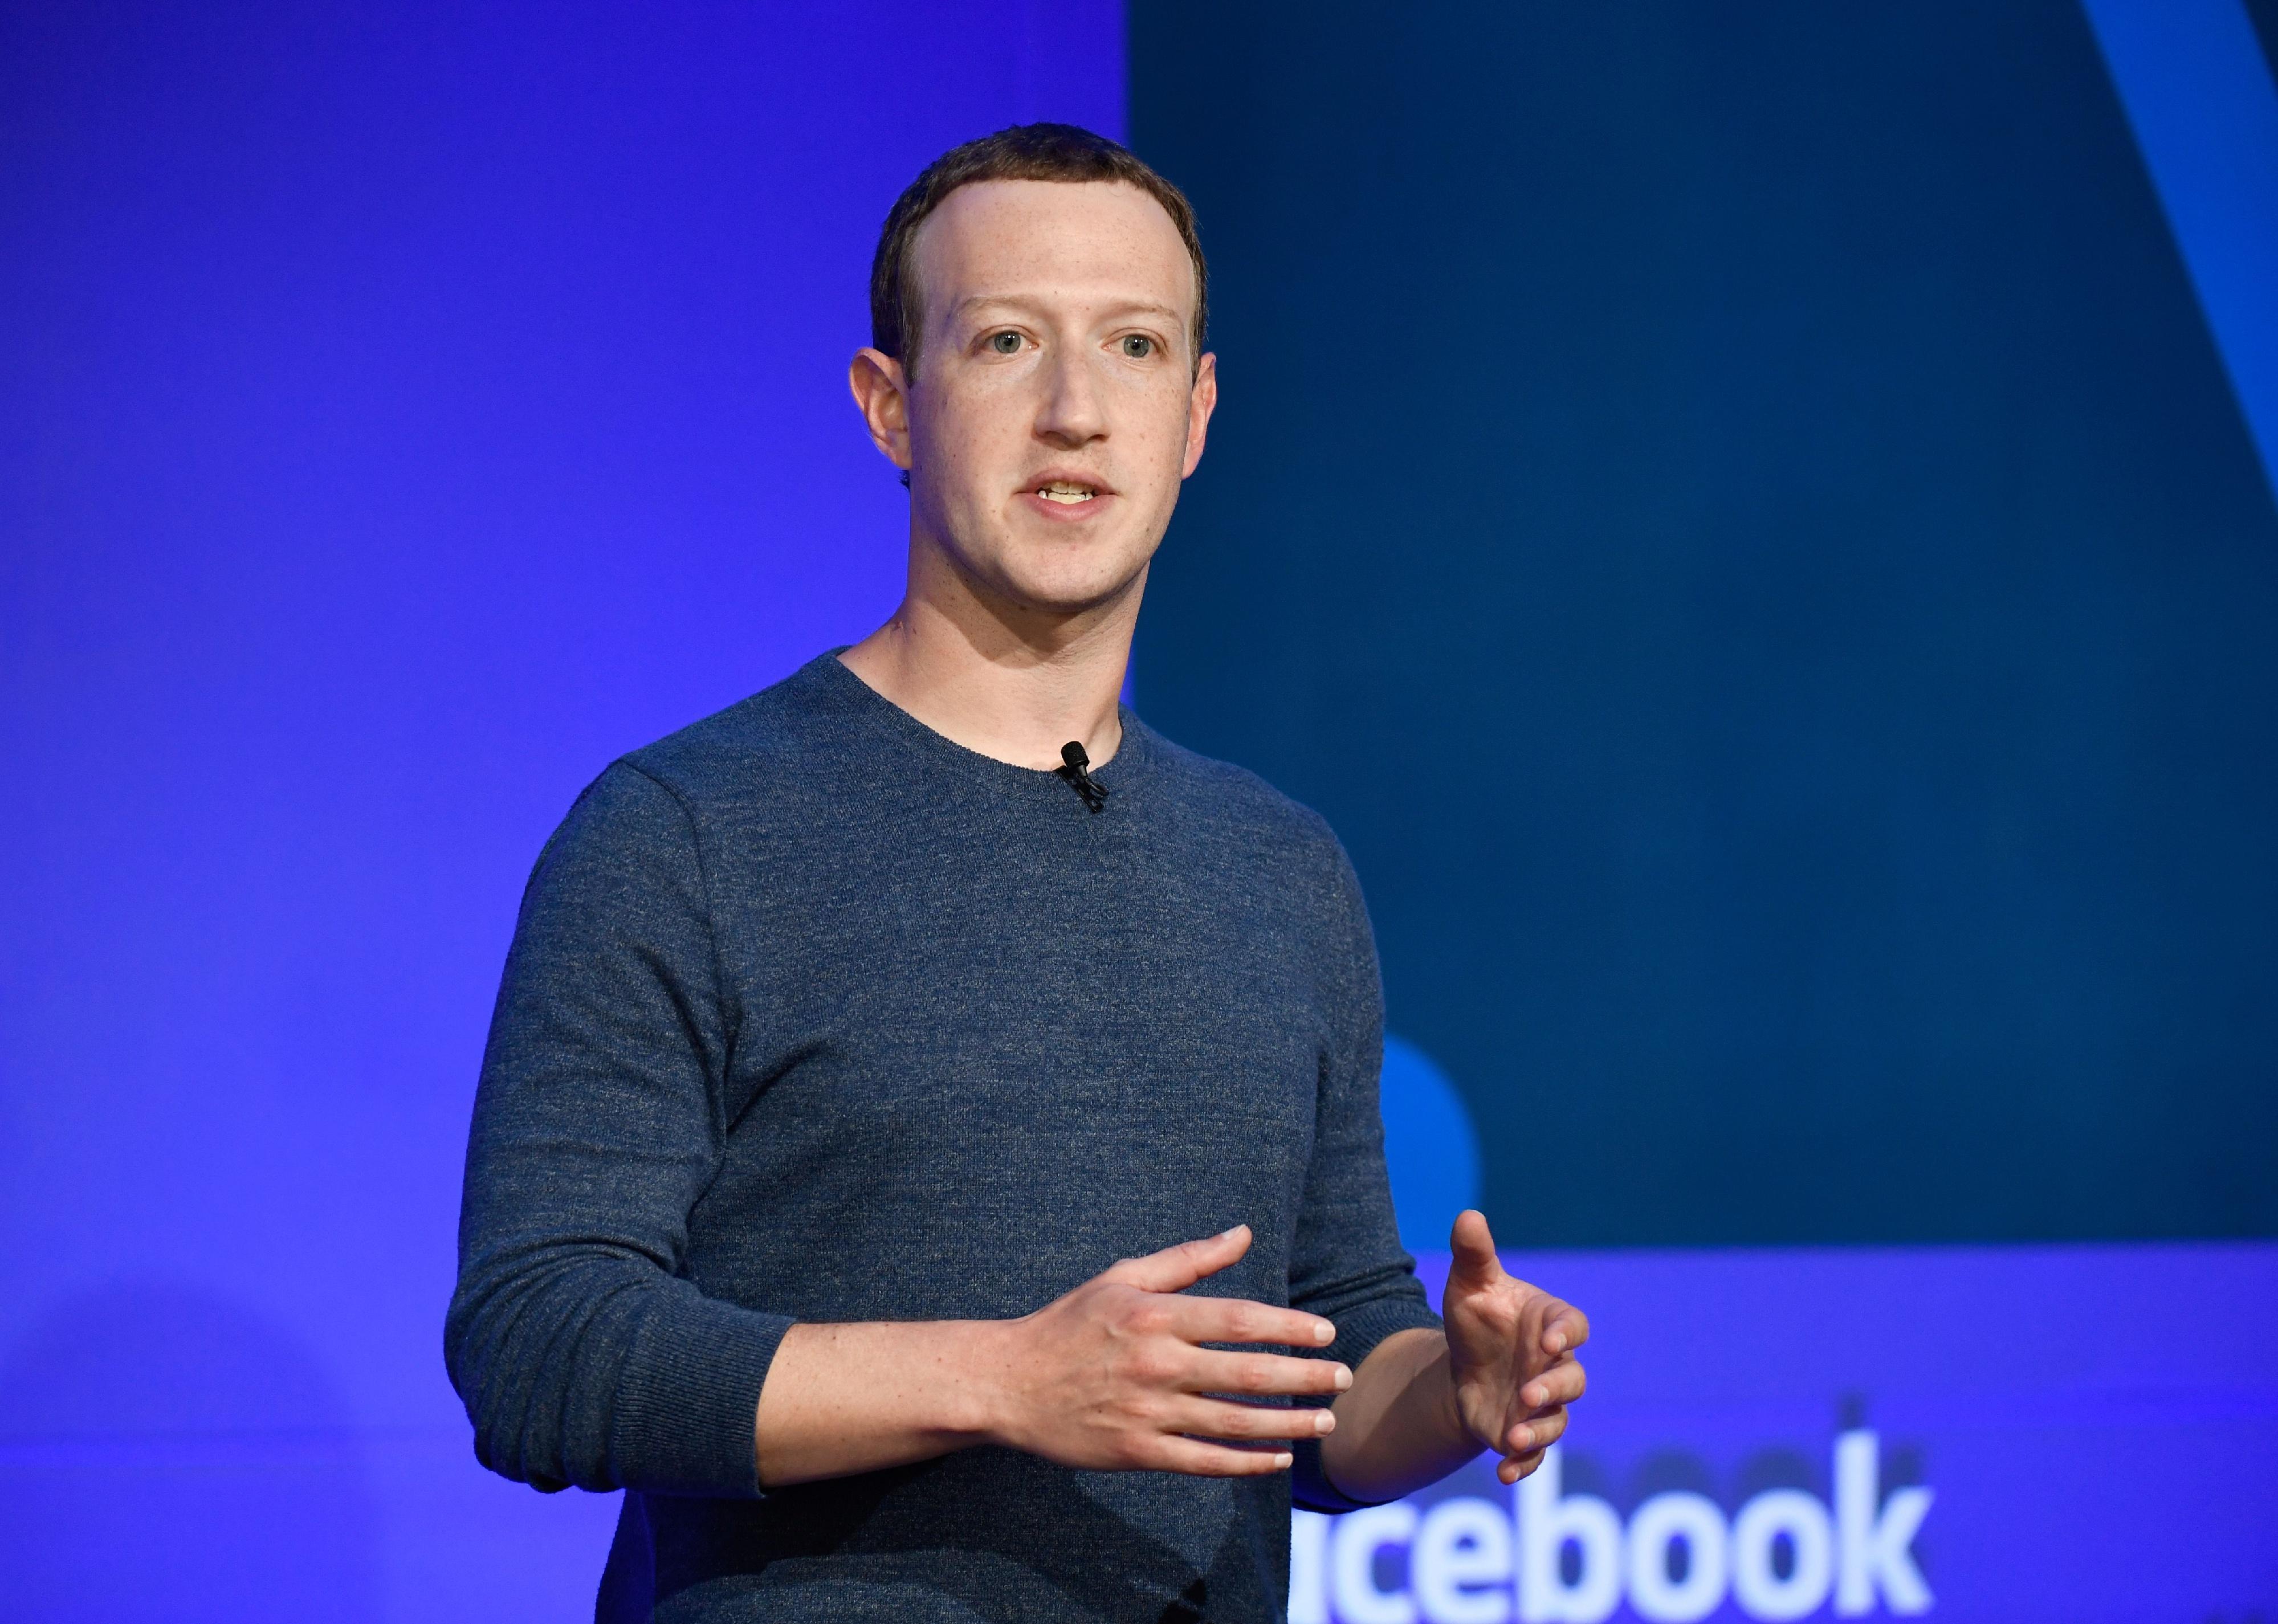 Mark Zuckerberg speaking in front of a blue Facebook background.